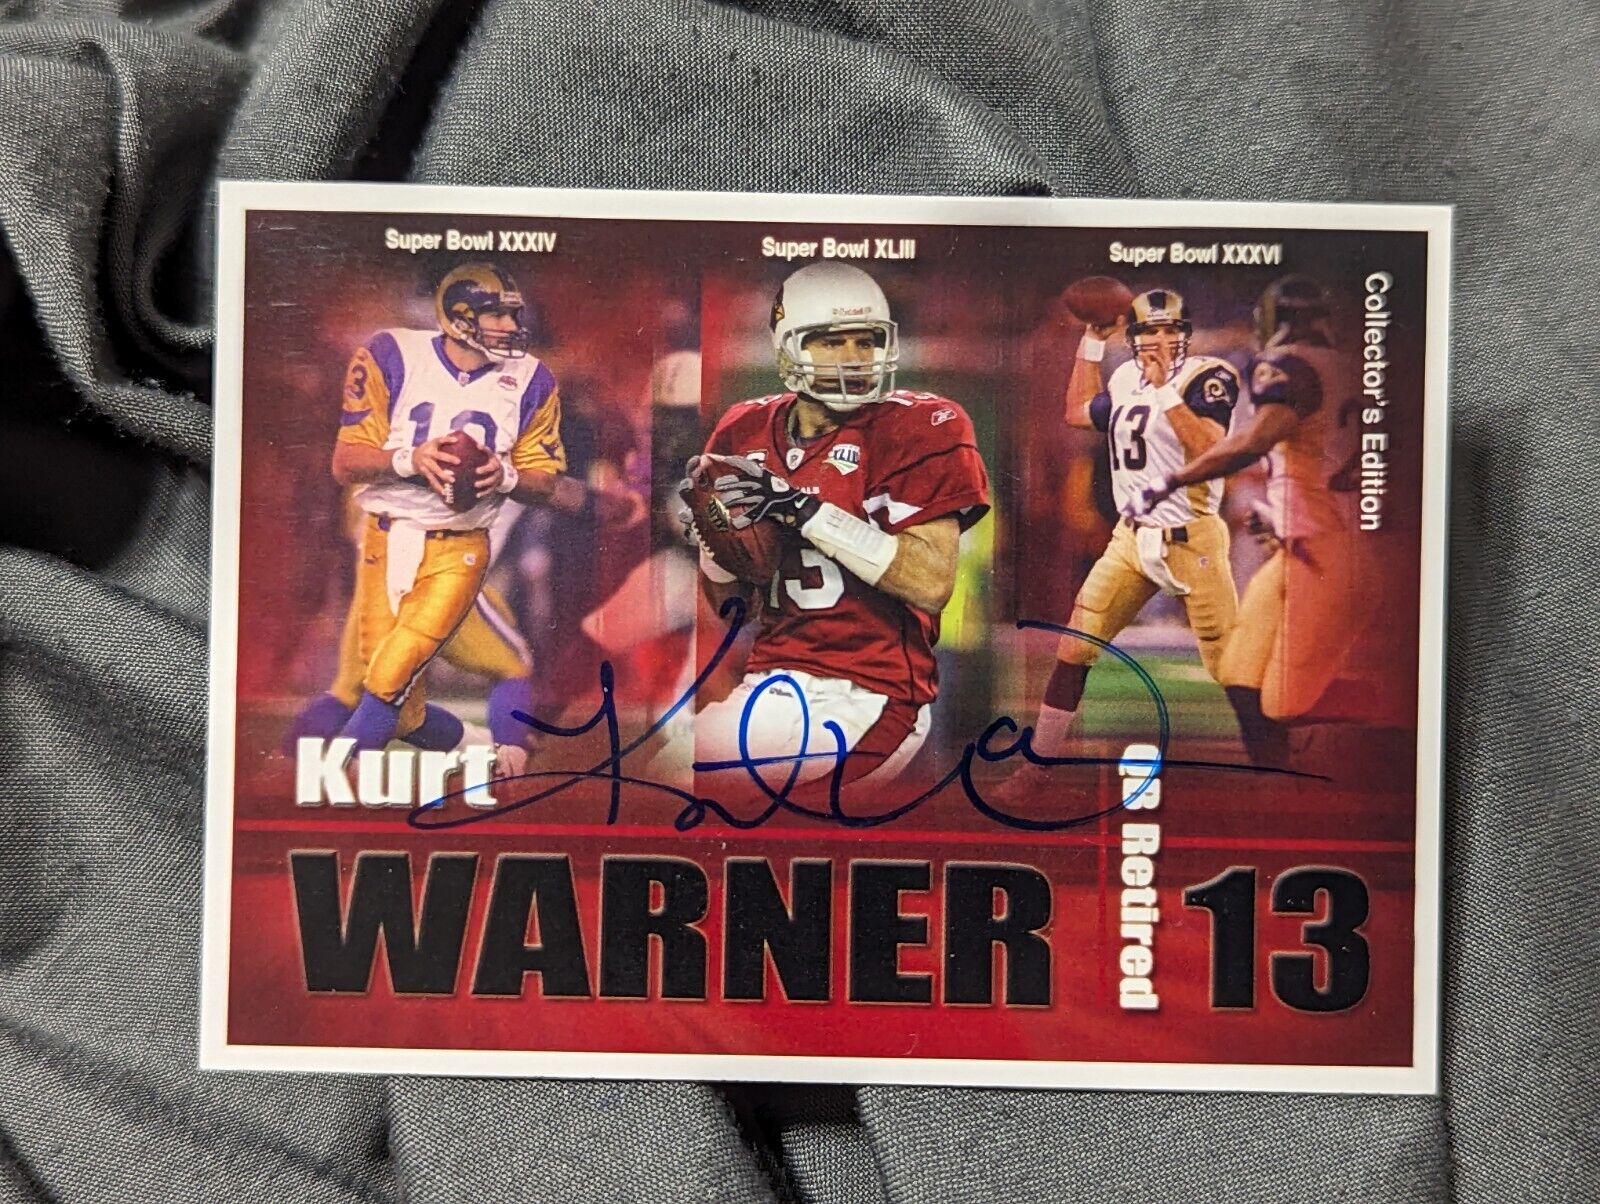 Kurt Warner Autograph Card Super Bowl Champion 